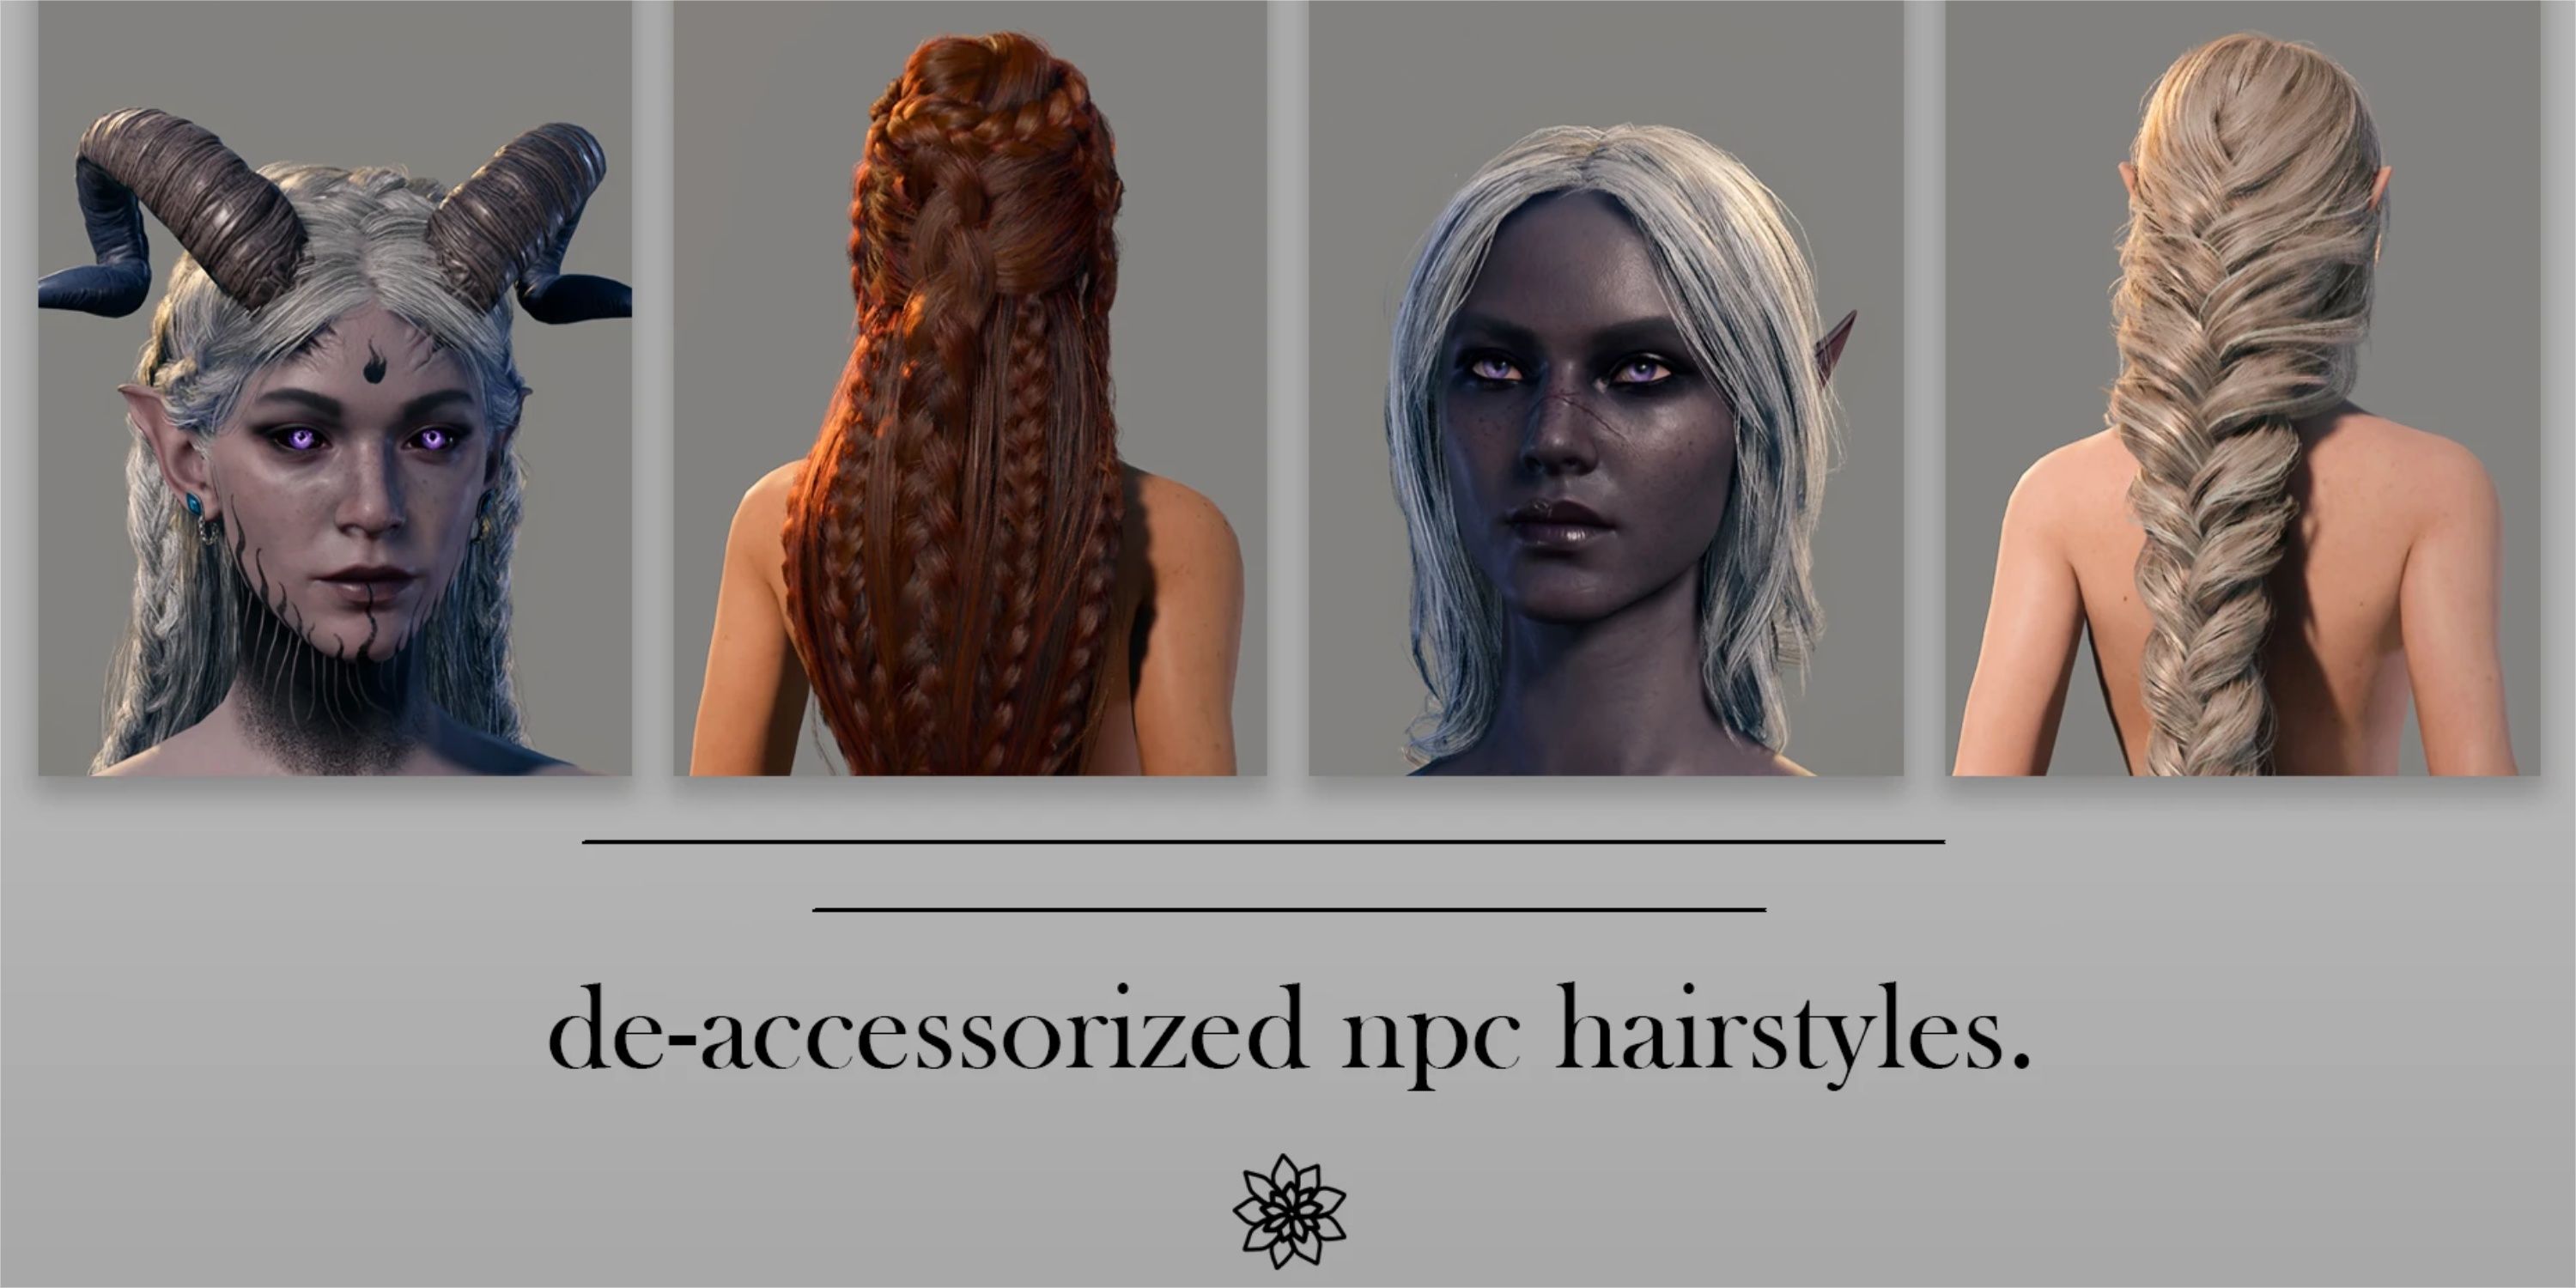 Baldurs Gate 3: Best Hair Mods